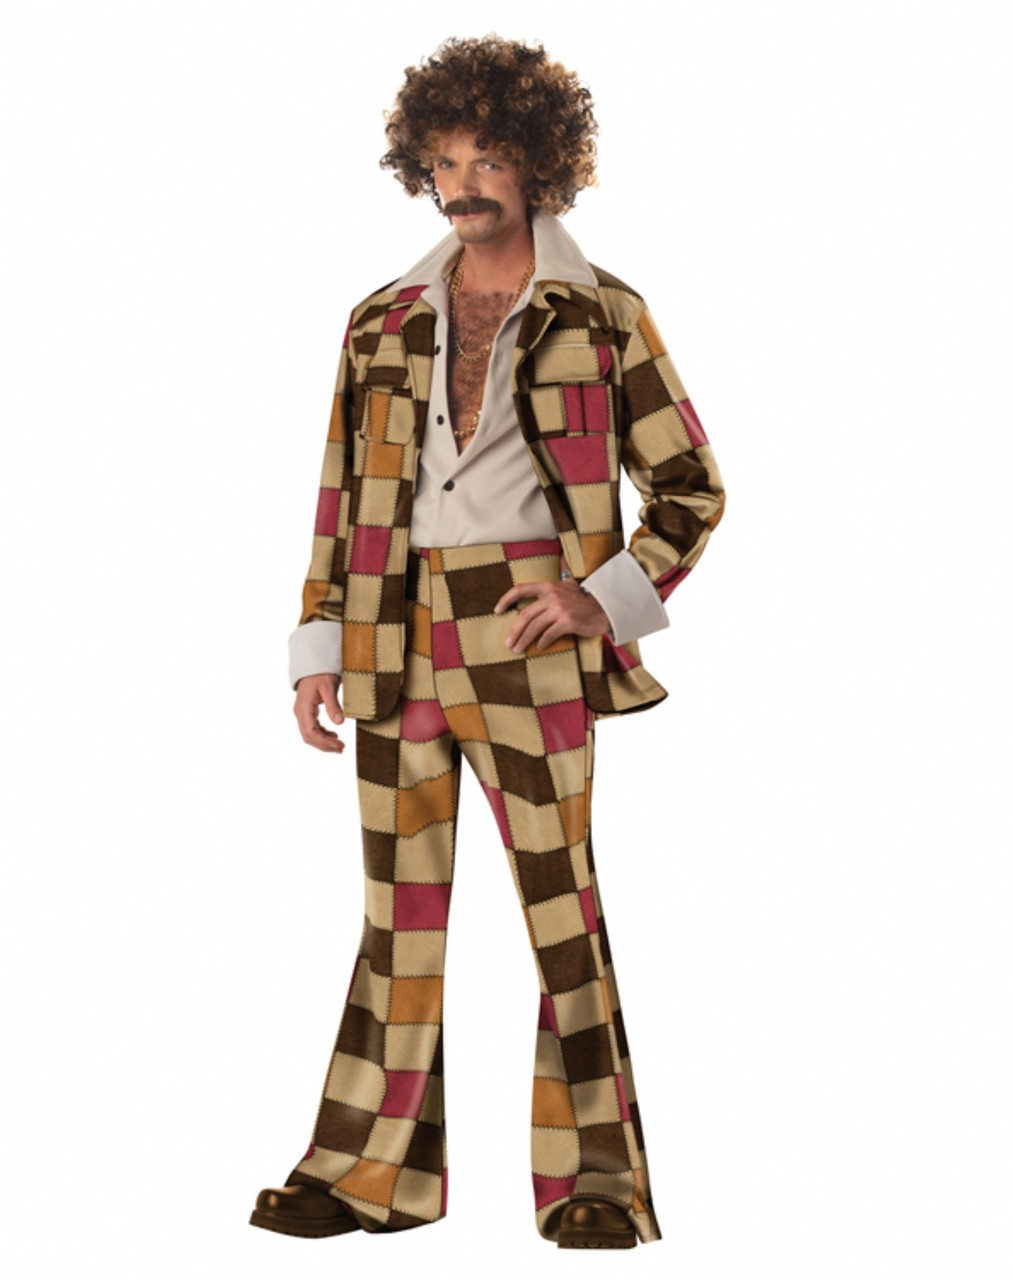 1970s Disco Sleazeball Leisure Suit | Men's Retro Costume